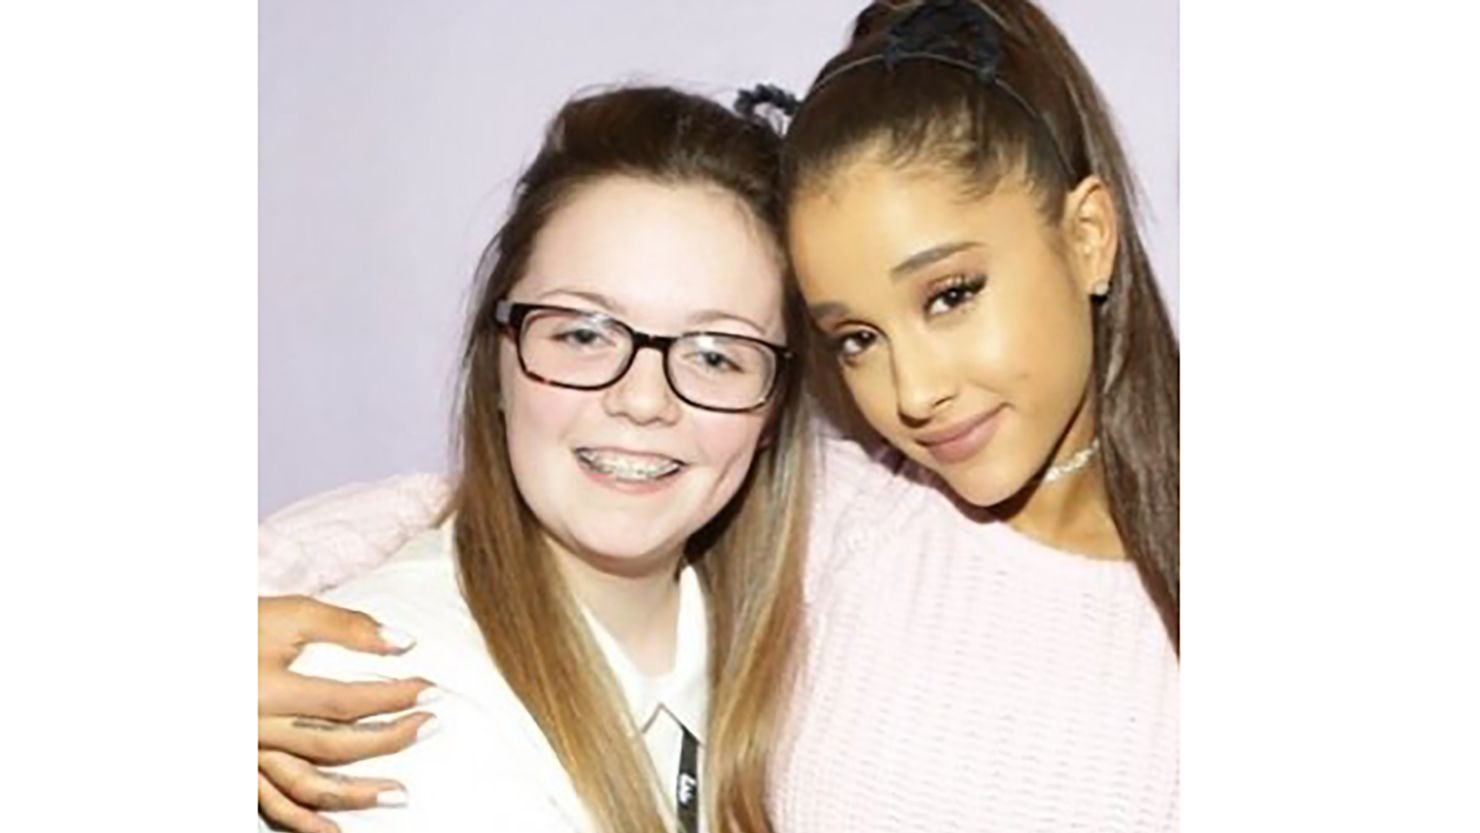 Fan Georgina Callander (left) had met the pop star Ariana Grande in 2015. 